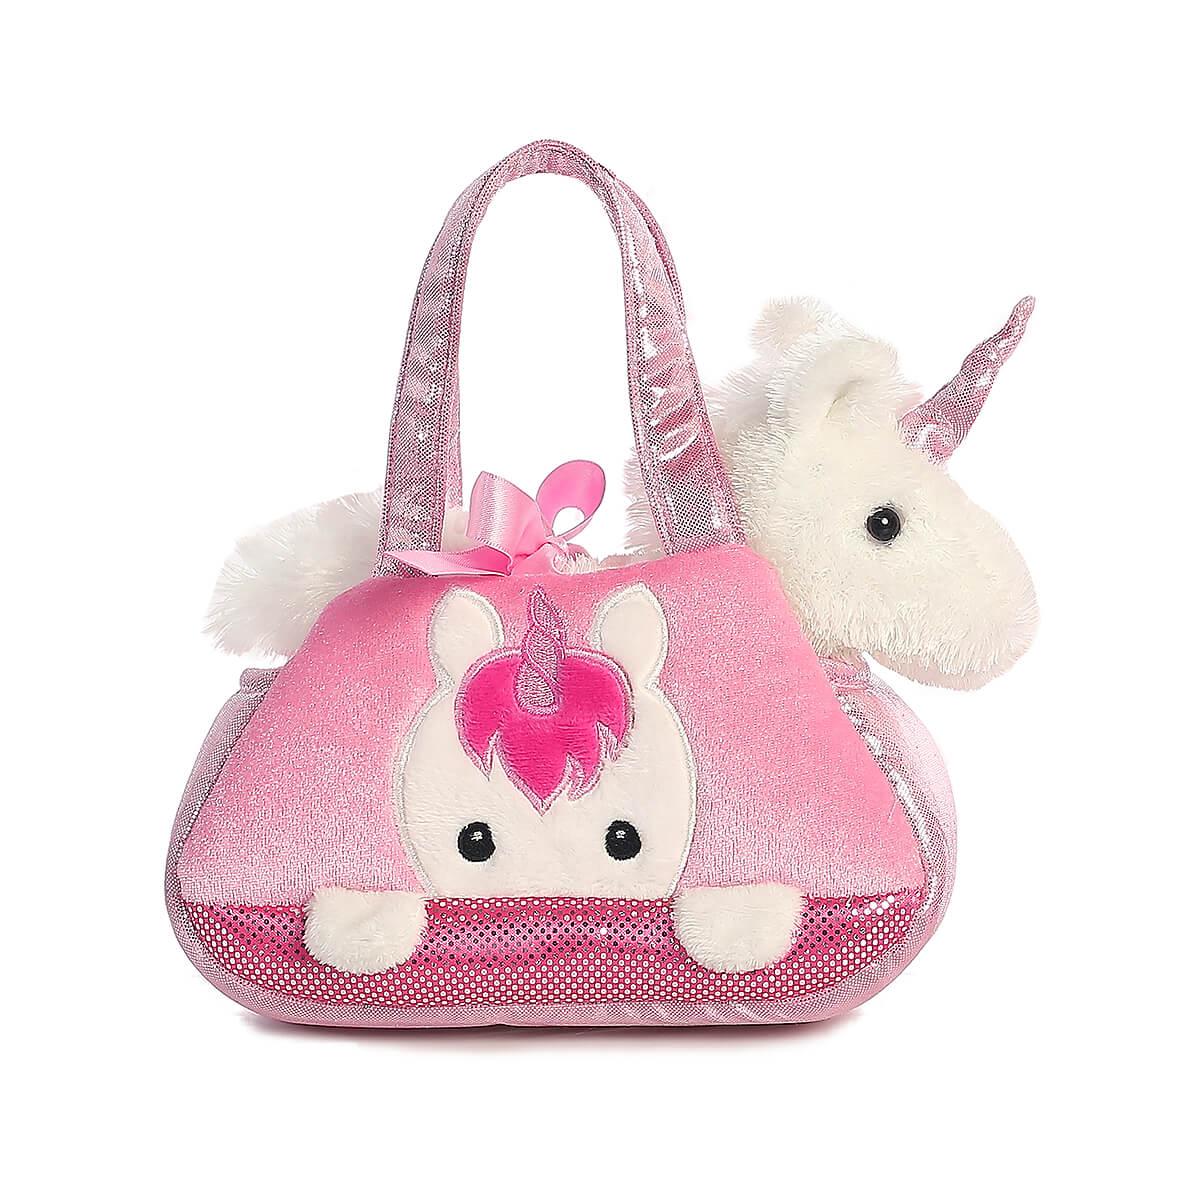  Peek- A- Boo Unicorn Purse Plush Toy